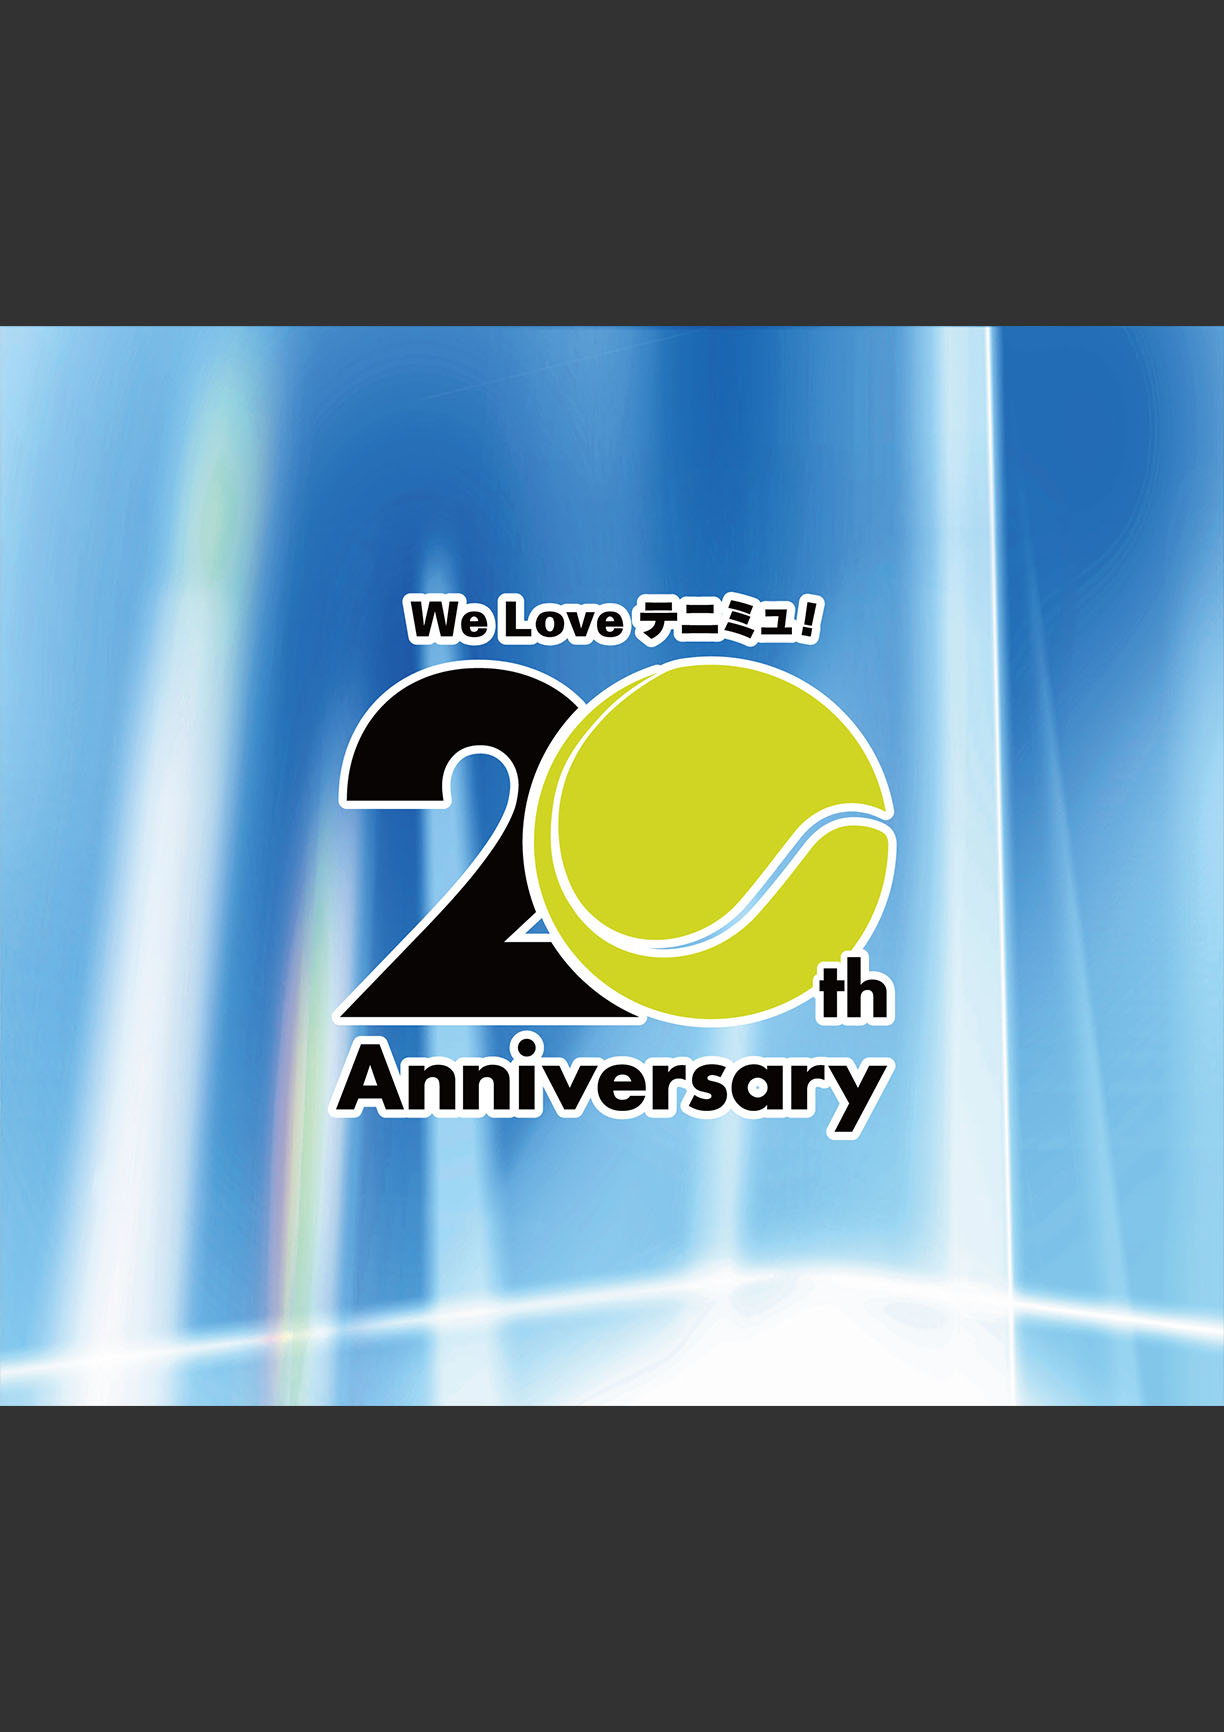 We Love テニミュ！20th Anniversary